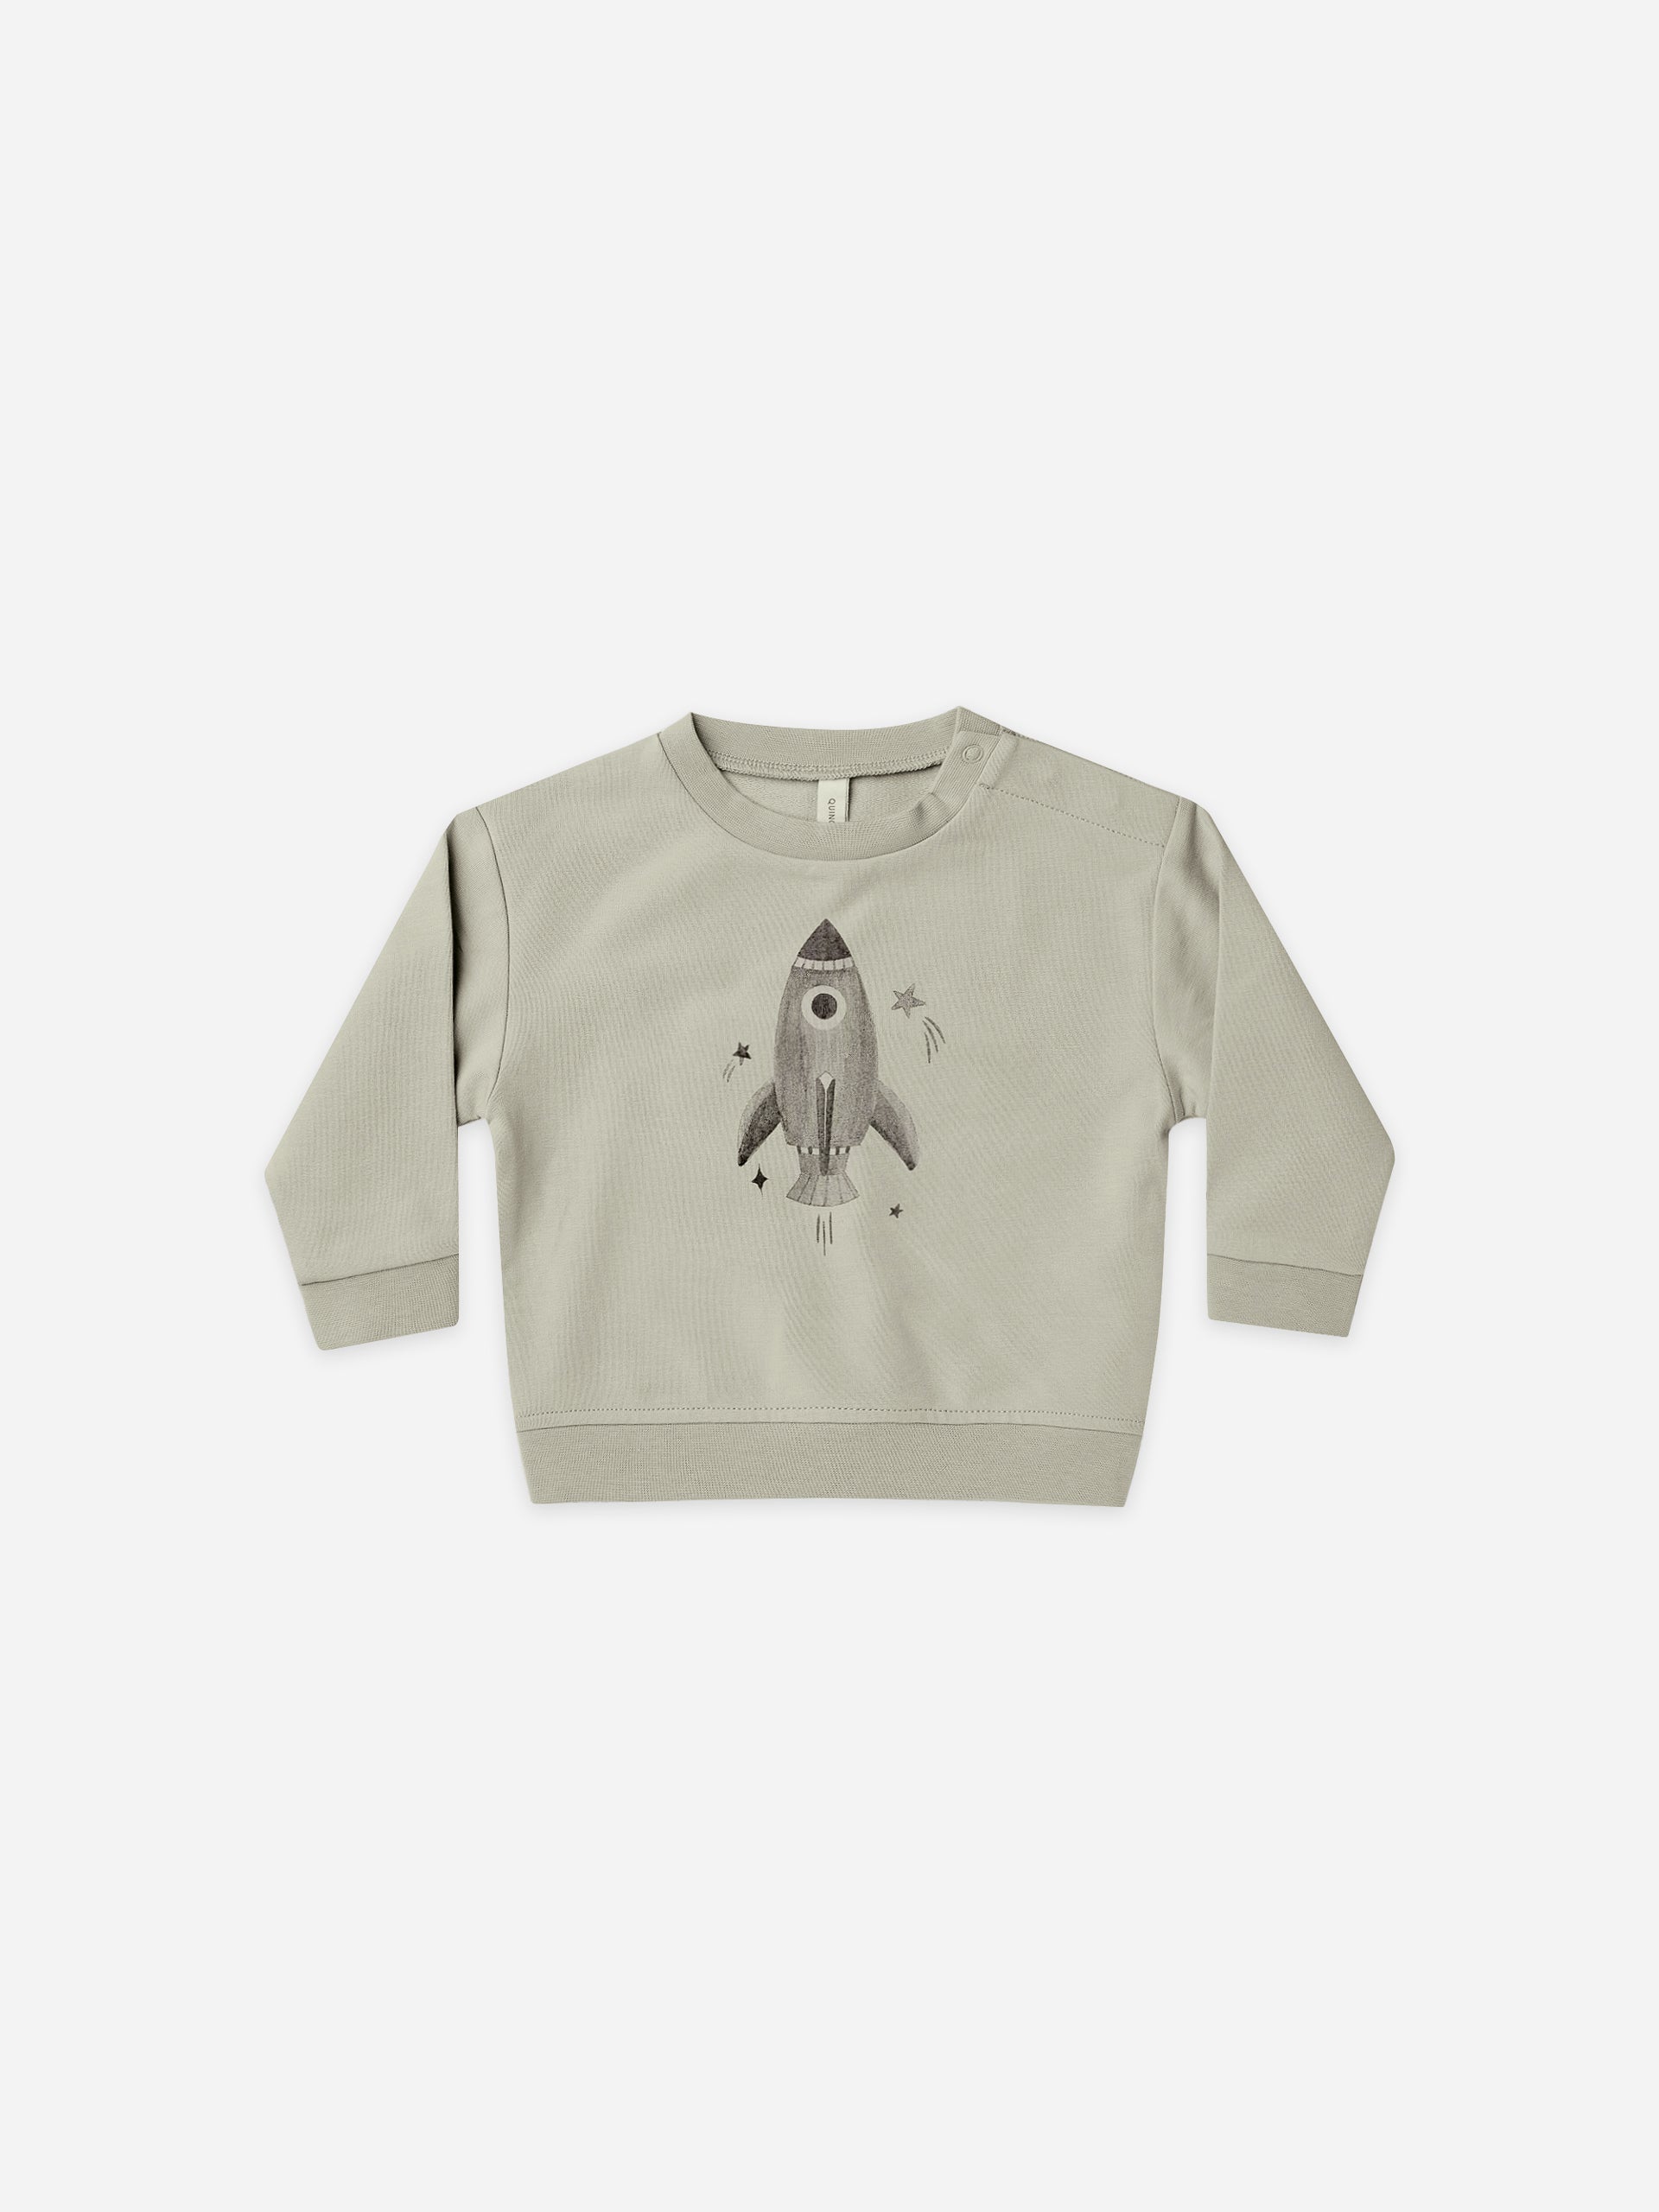 sweatshirt | spaceship - Quincy Mae | Baby Basics | Baby Clothing | Organic Baby Clothes | Modern Baby Boy Clothes |